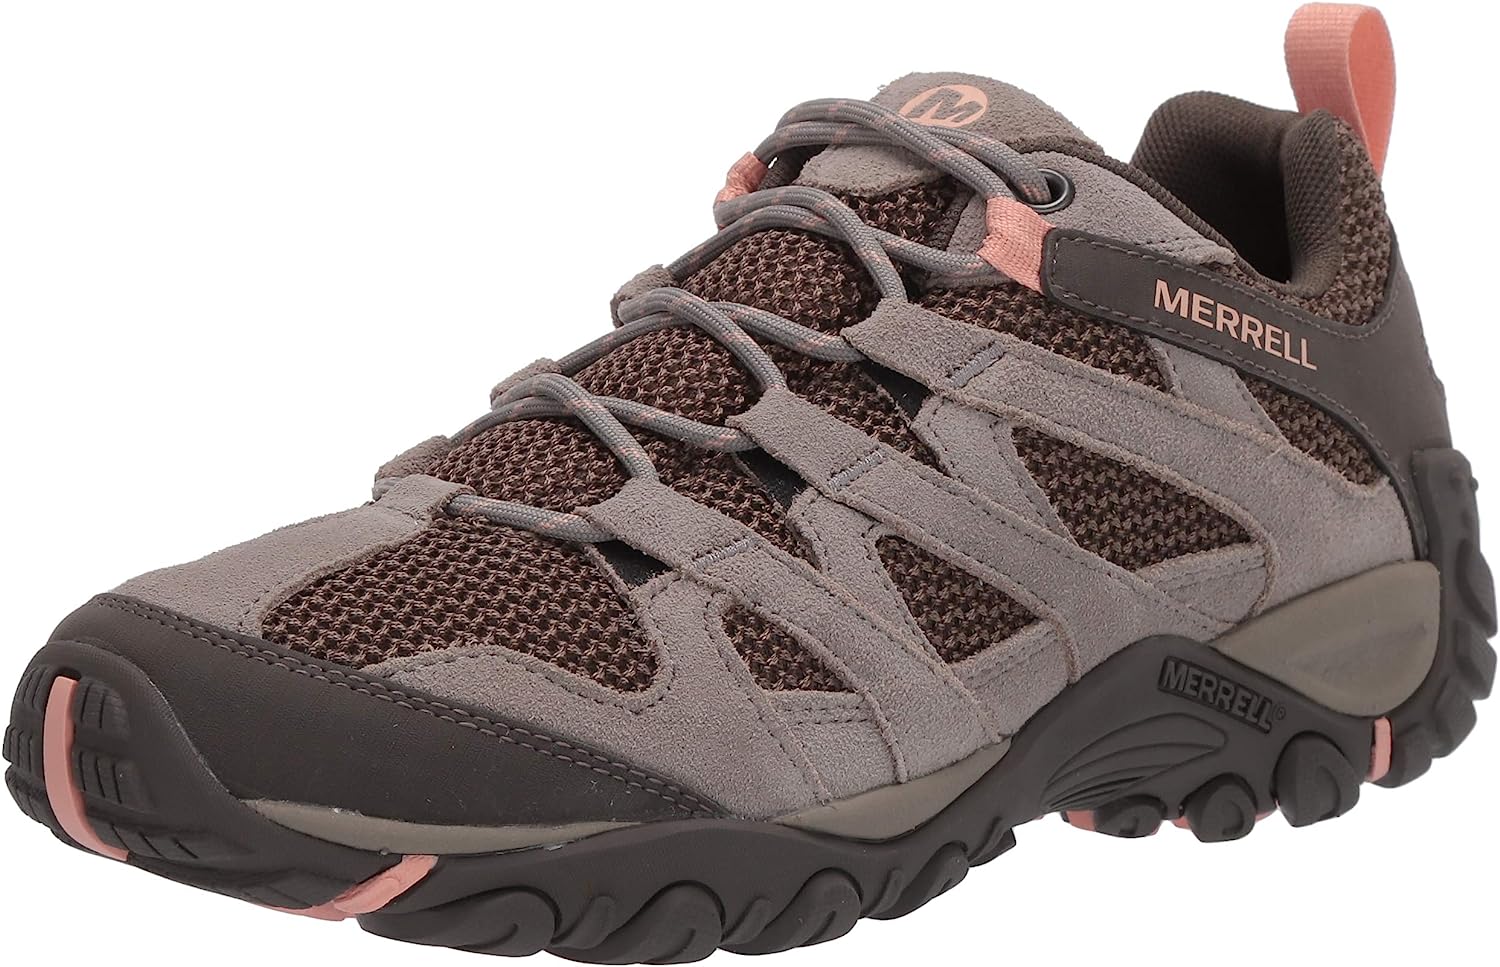 Merrell Women's Alverstone Hiking Shoe